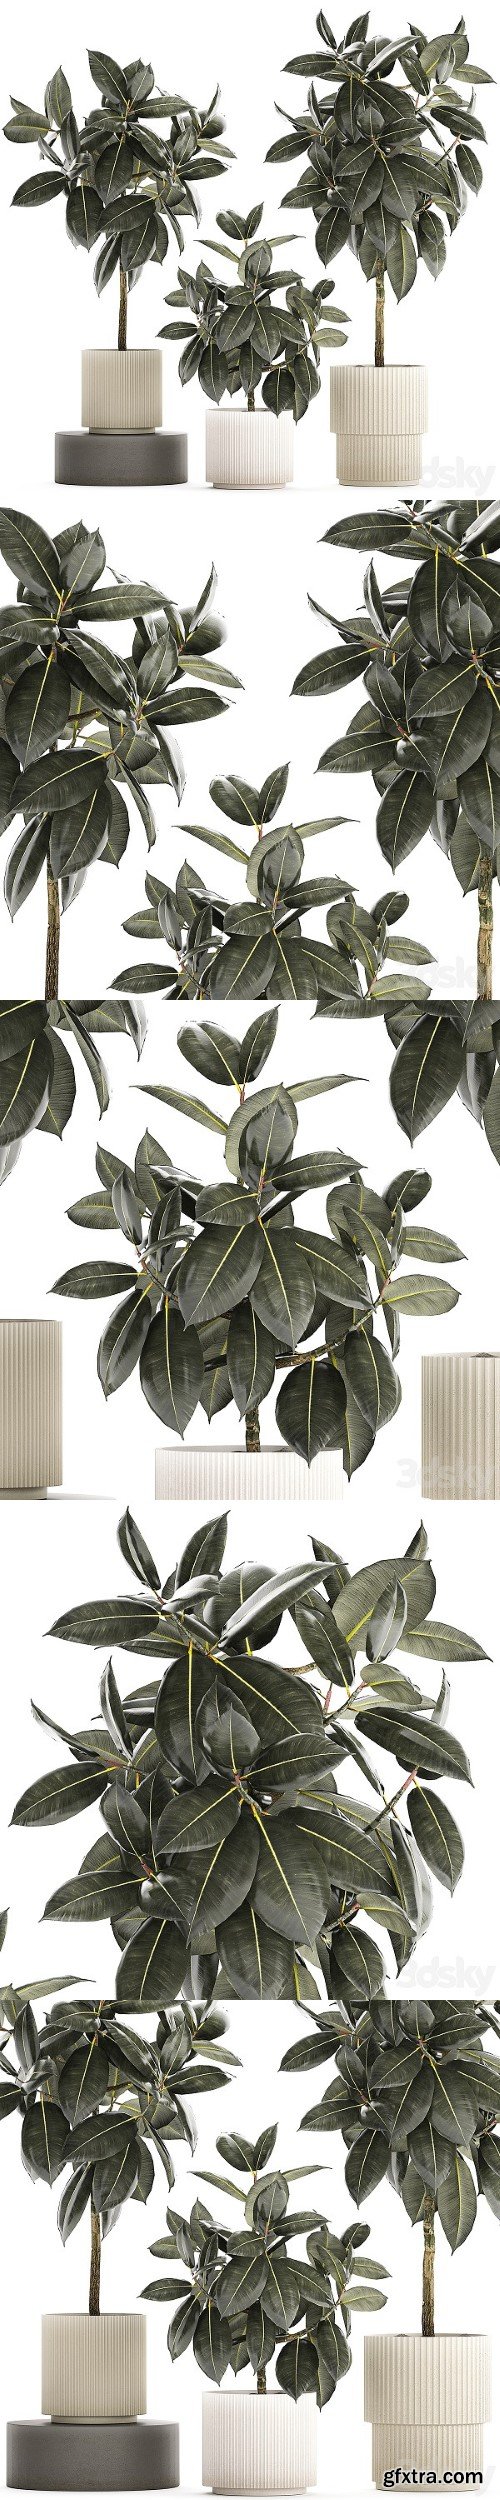 Pro 3DSky - A Beautiful Interior Plant in A Modern Flowerpot